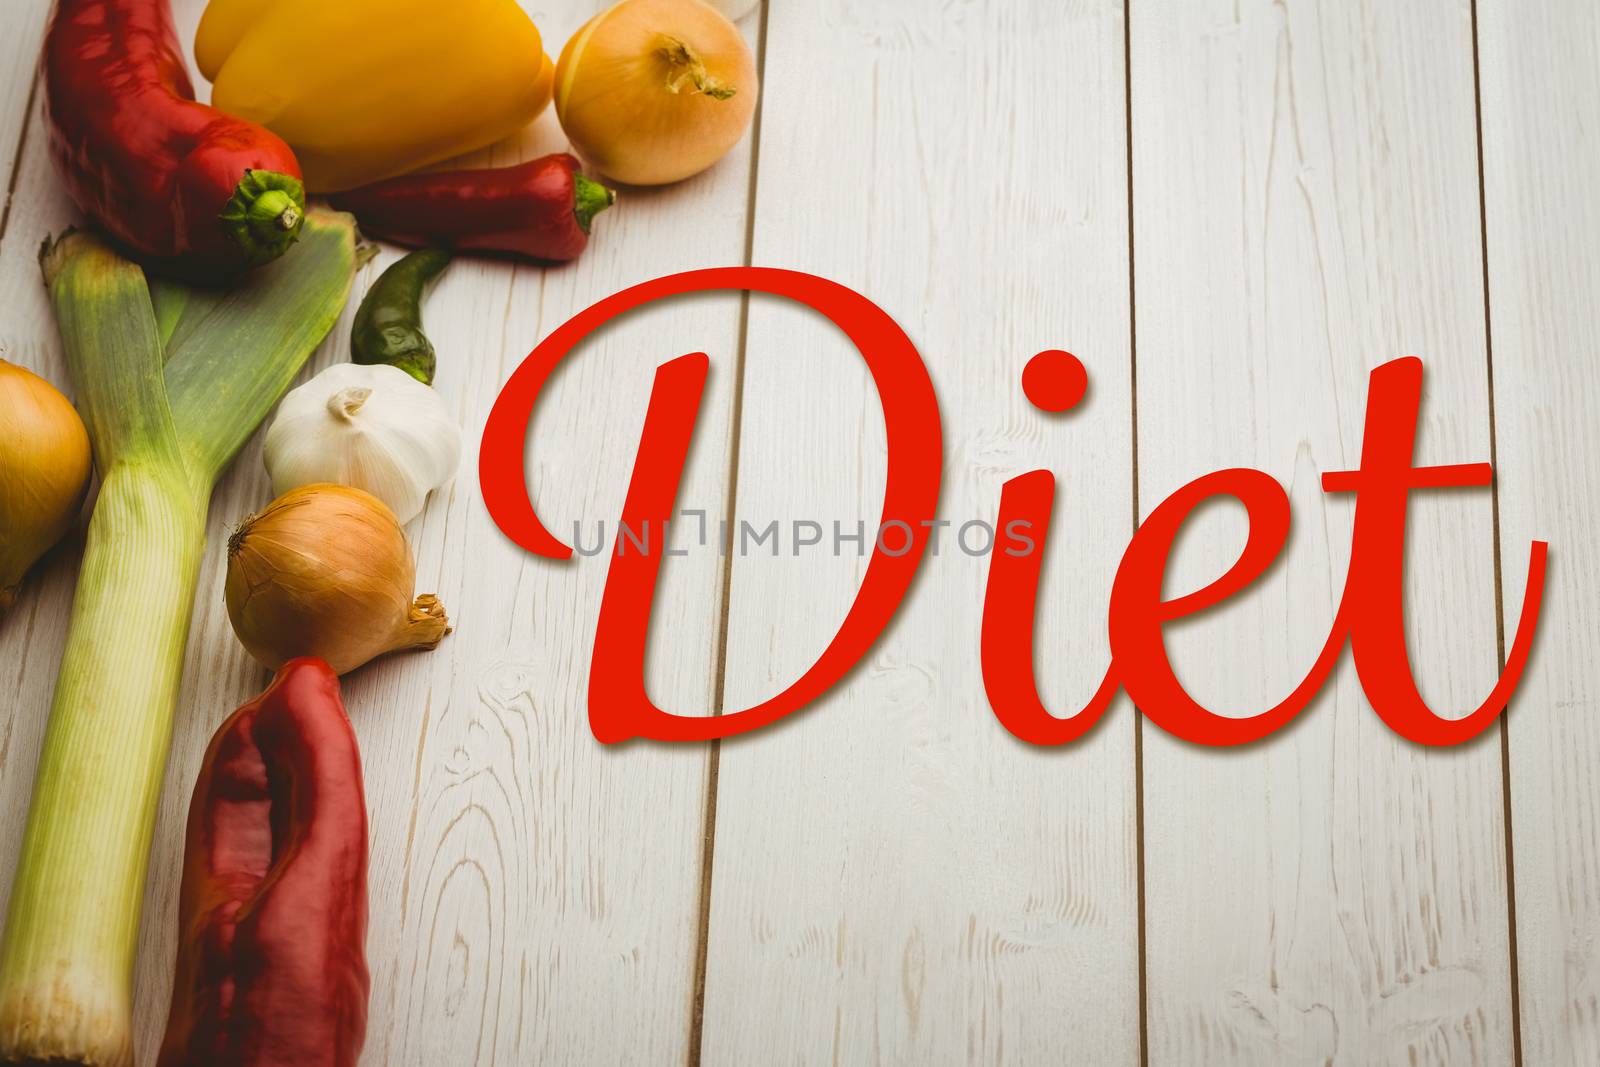 Composite image of diet by Wavebreakmedia